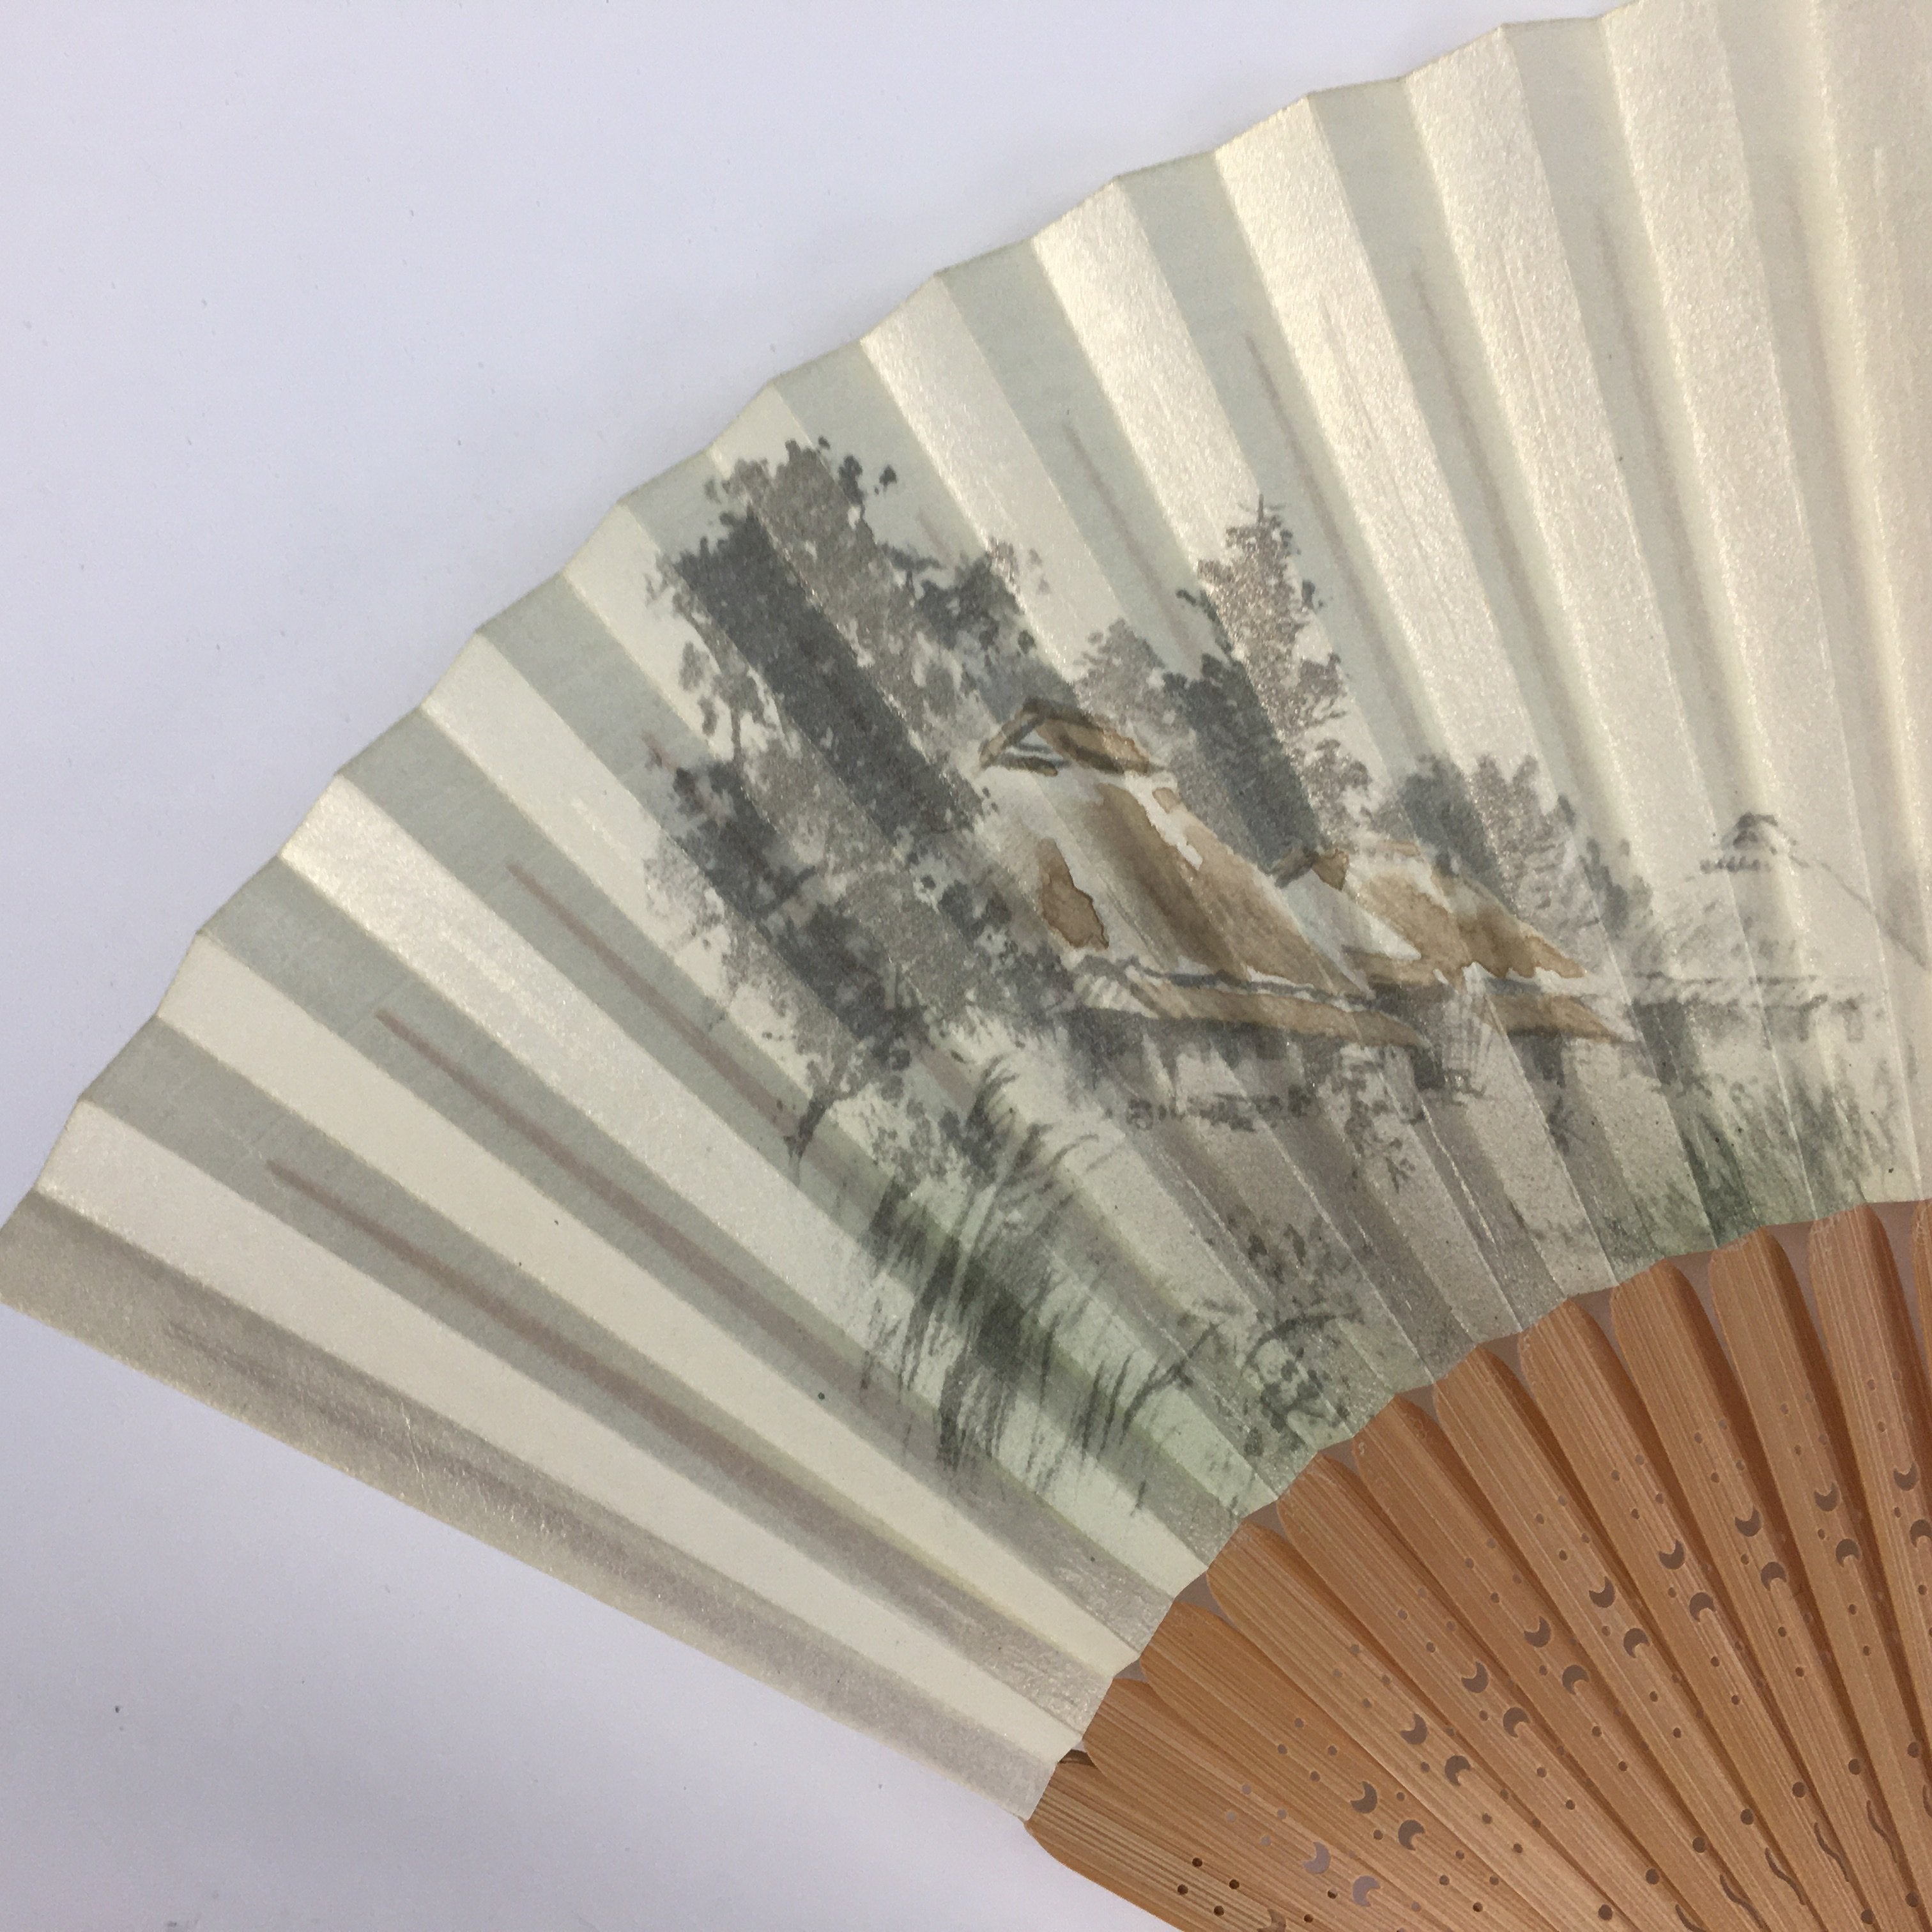 Japanese Folding Fan Vtg Sensu Paper Bamboo Frame Shiny white Country House 4D51